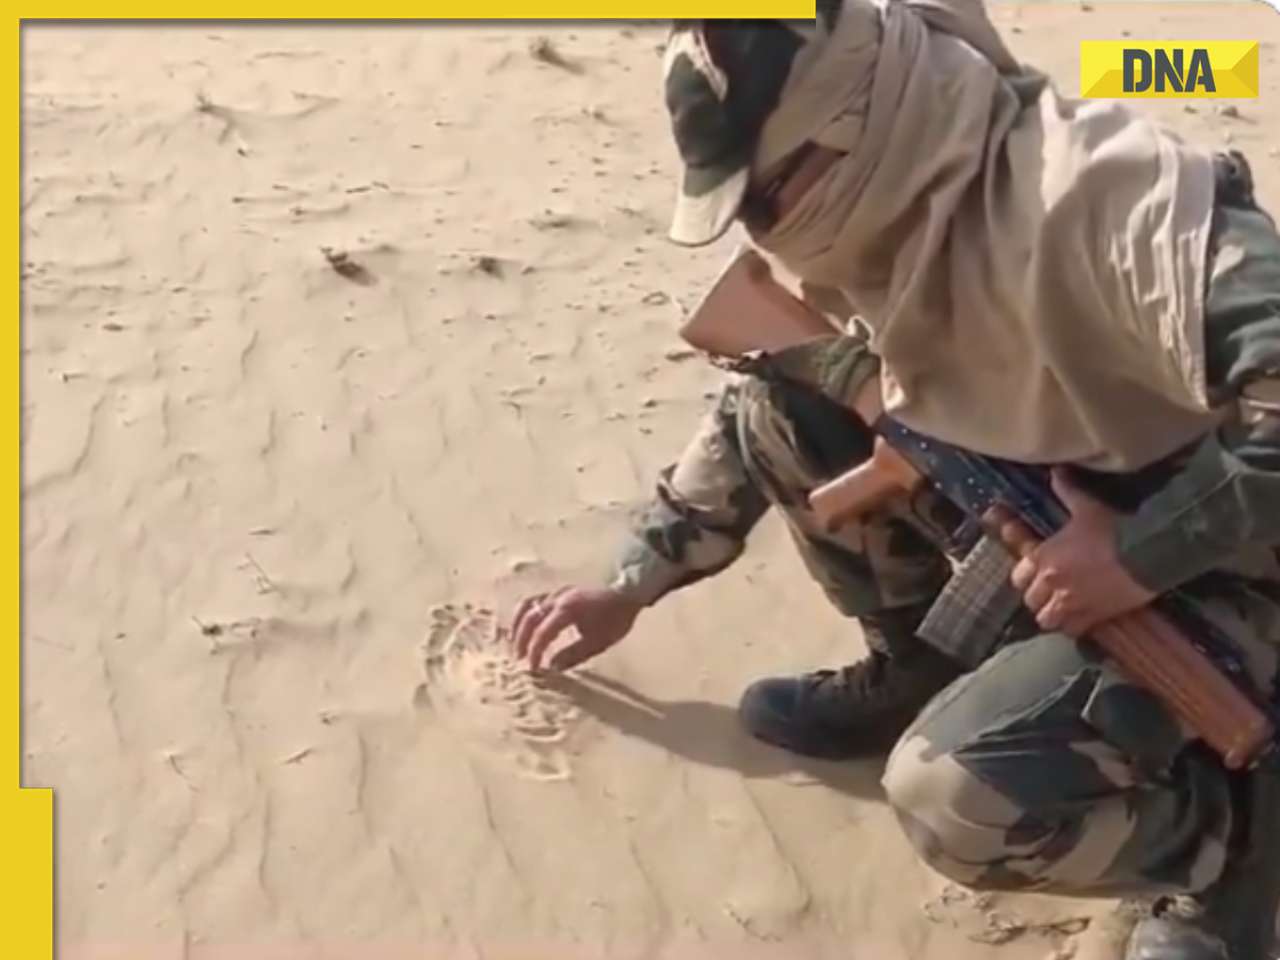 Viral video: BSF jawan roasts papad on scorching sand in Bikaner, internet reacts